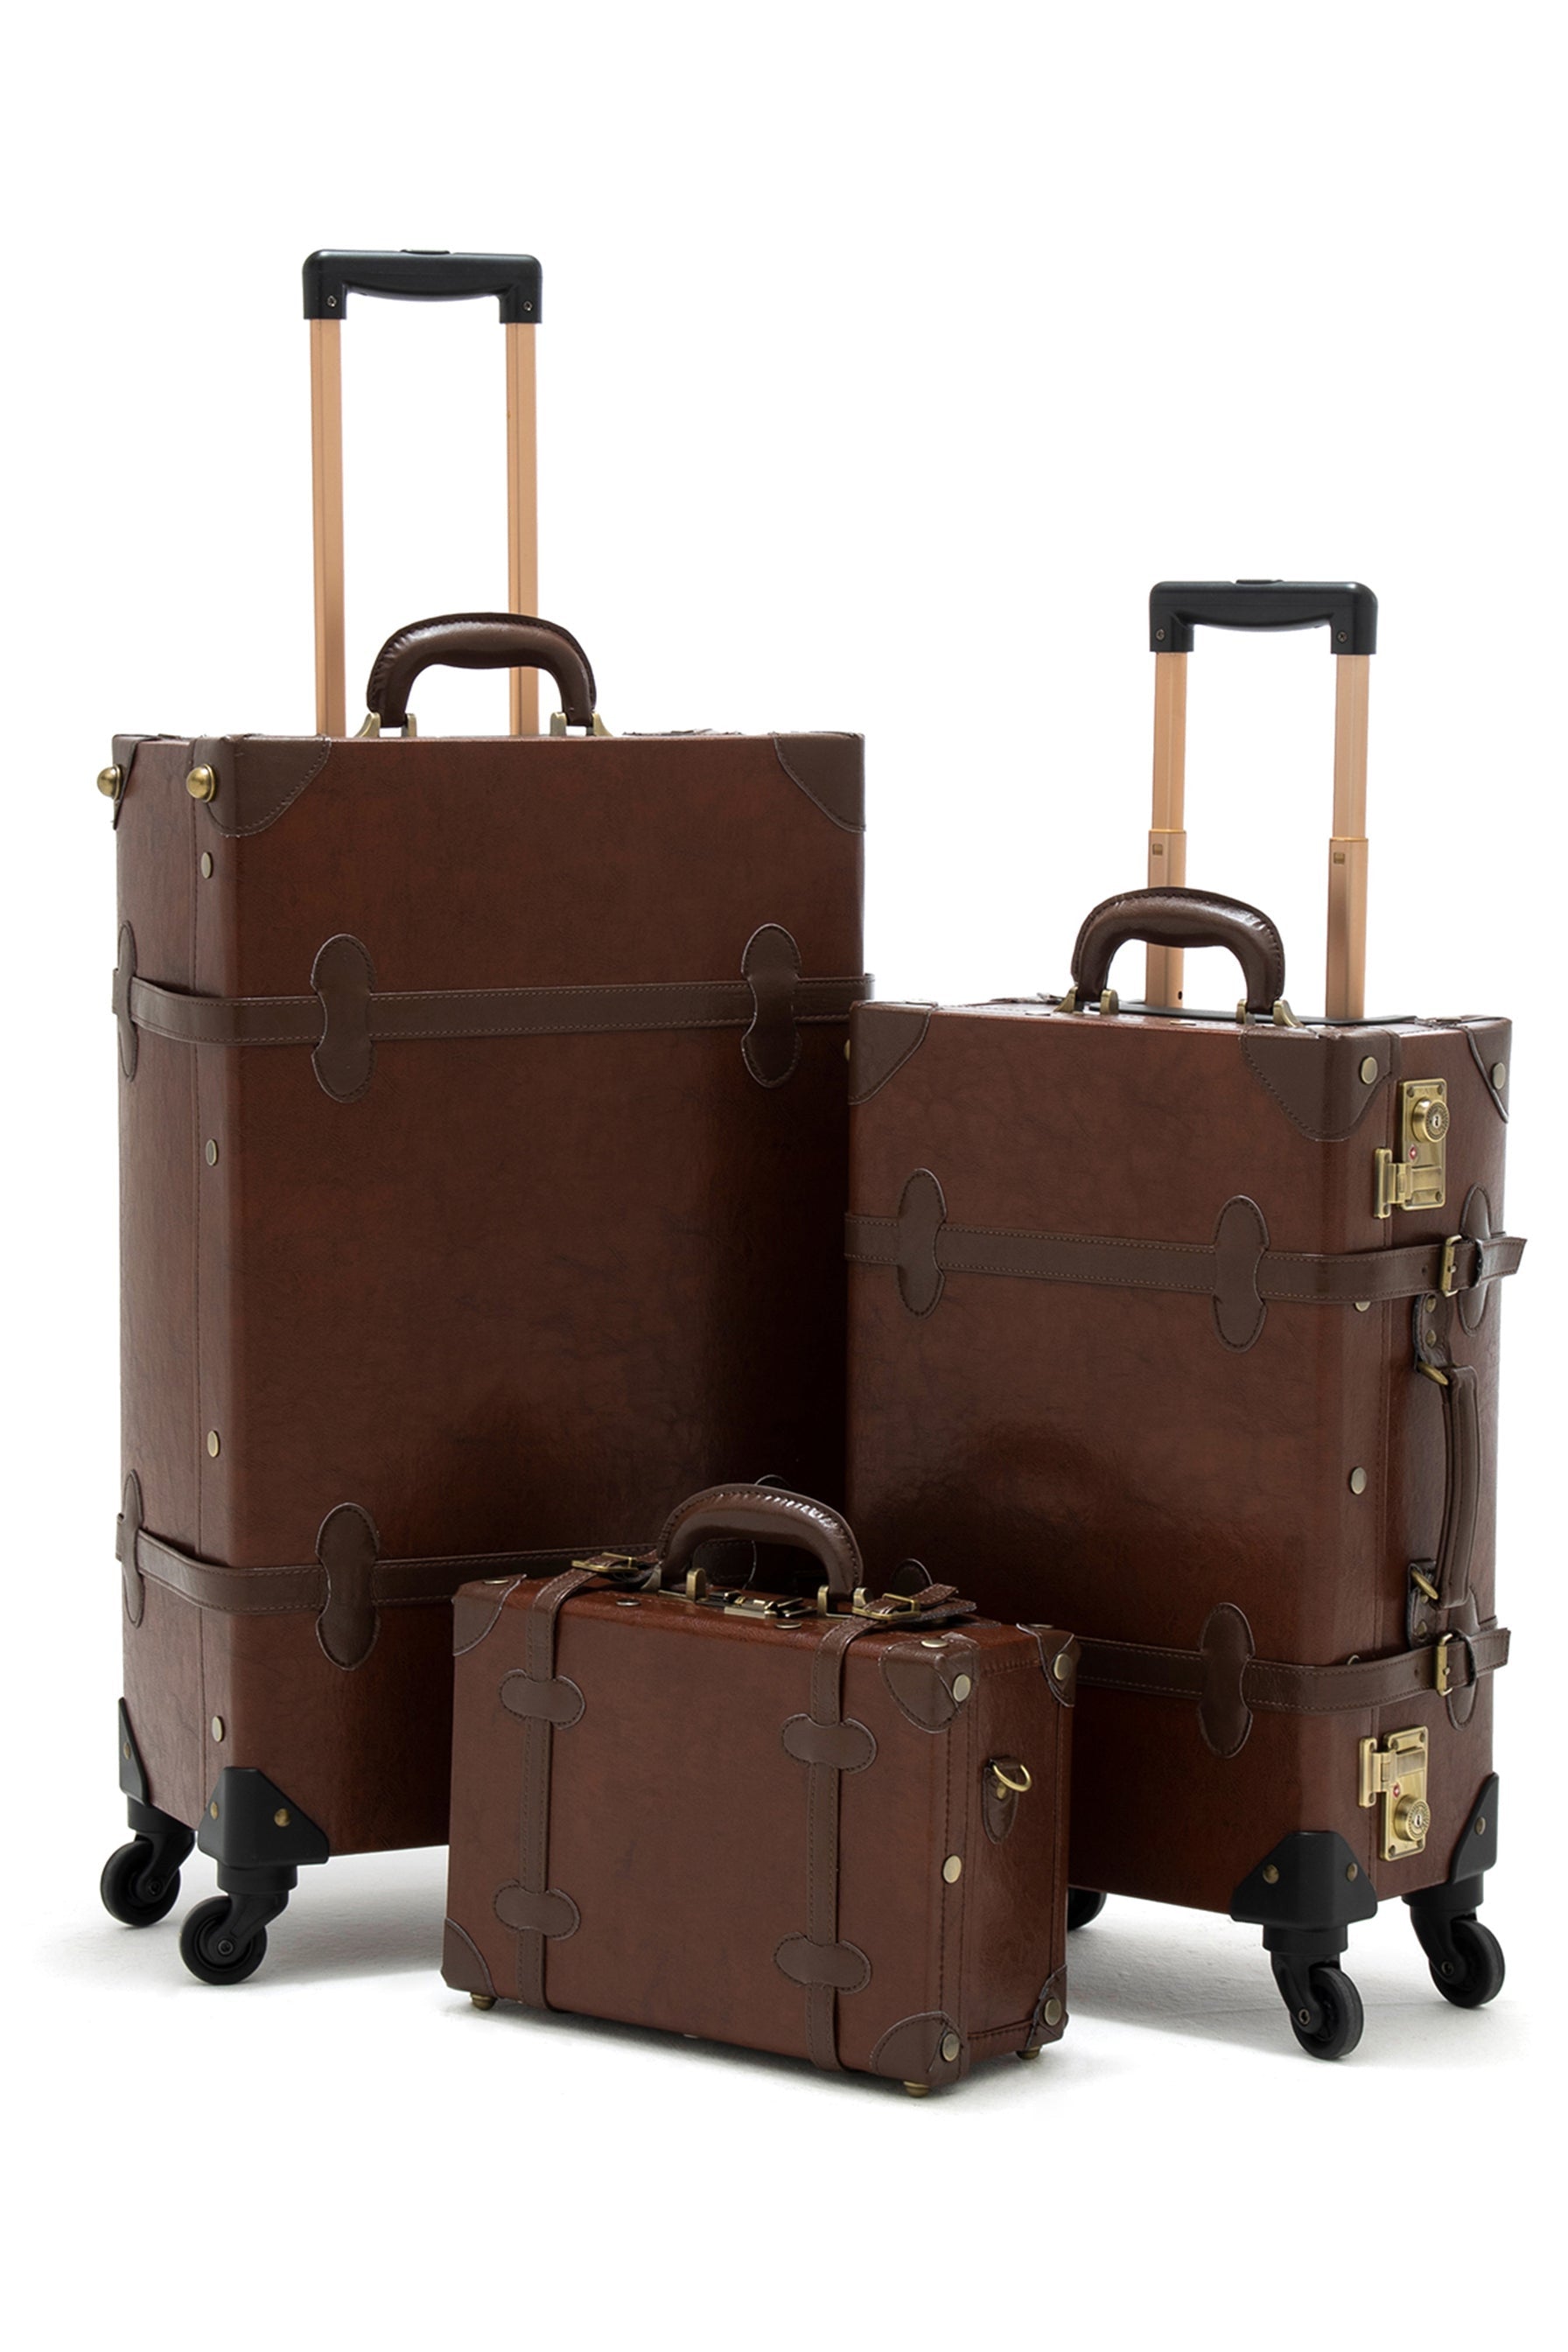 Minimalism 3 Pieces Luggage Set - Caramel Brown's